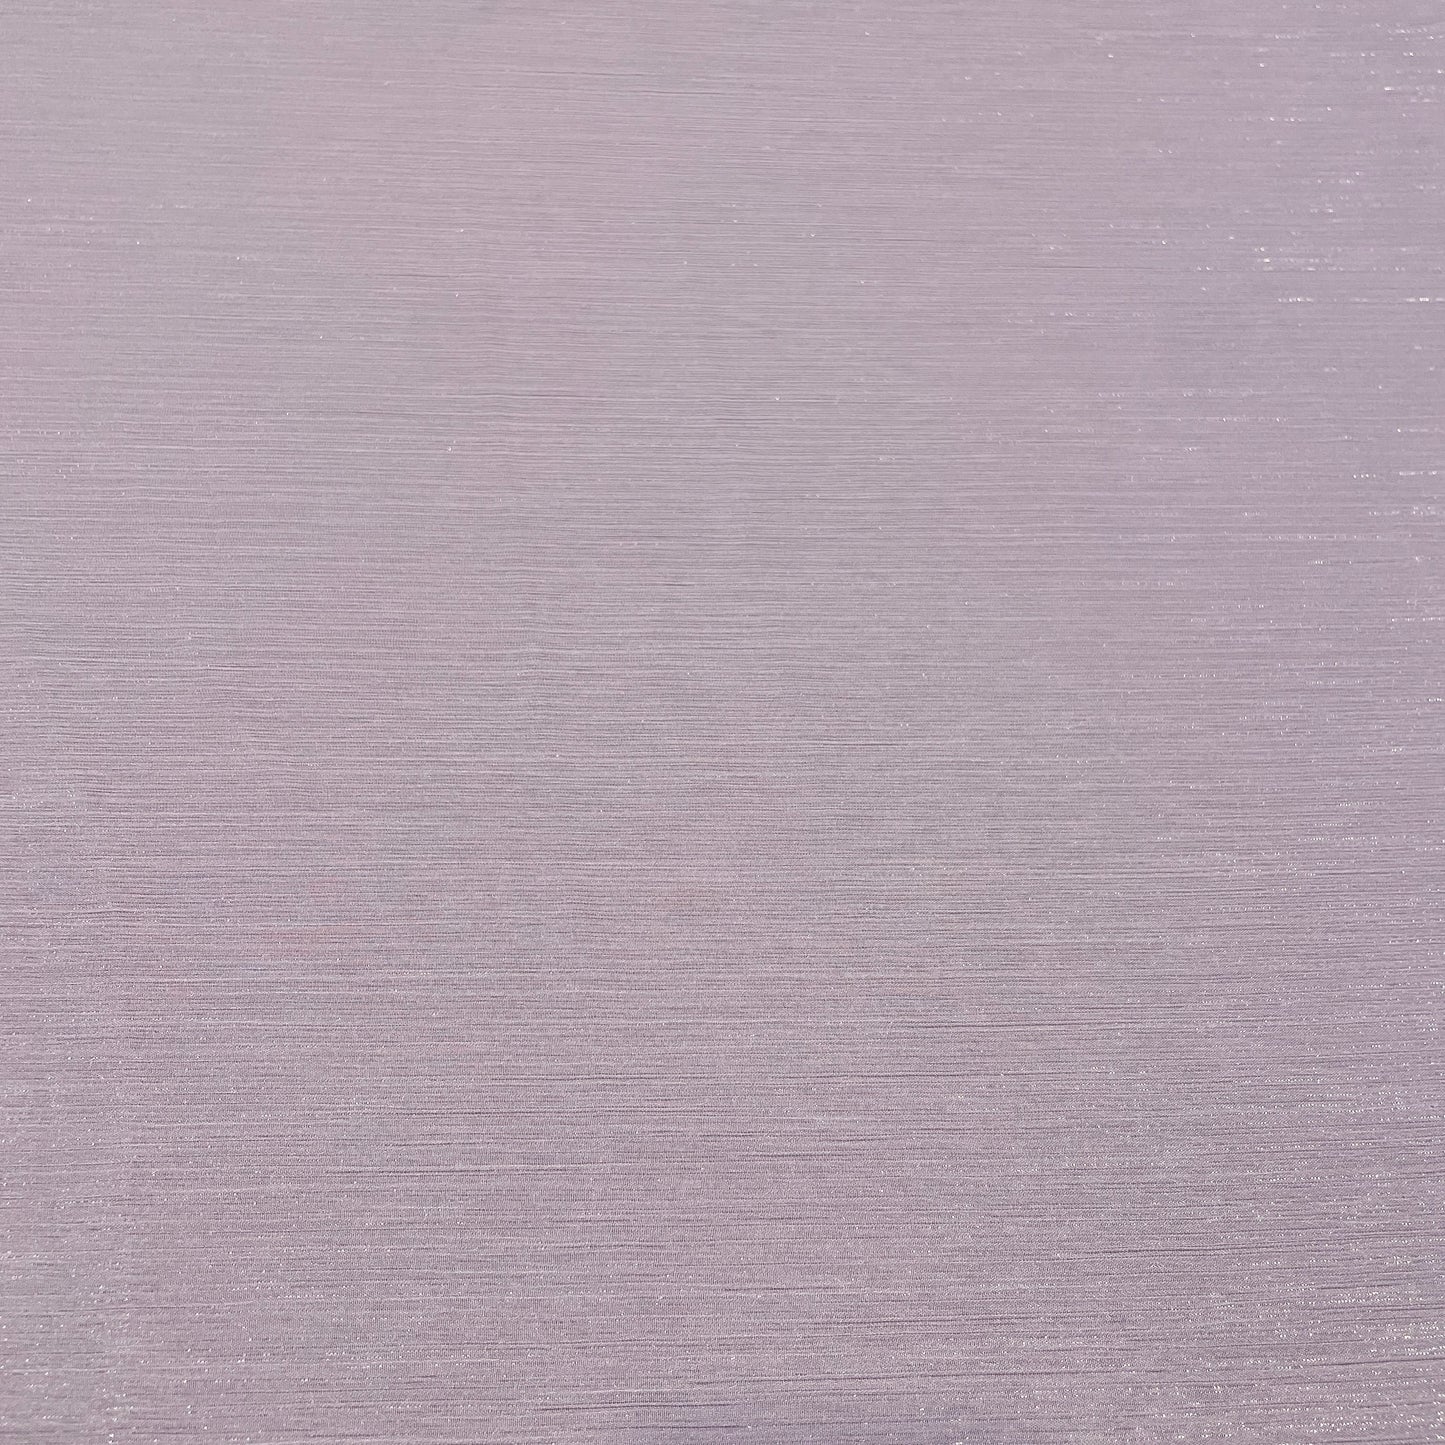 Premium Purple Solid Chiffon Fabric